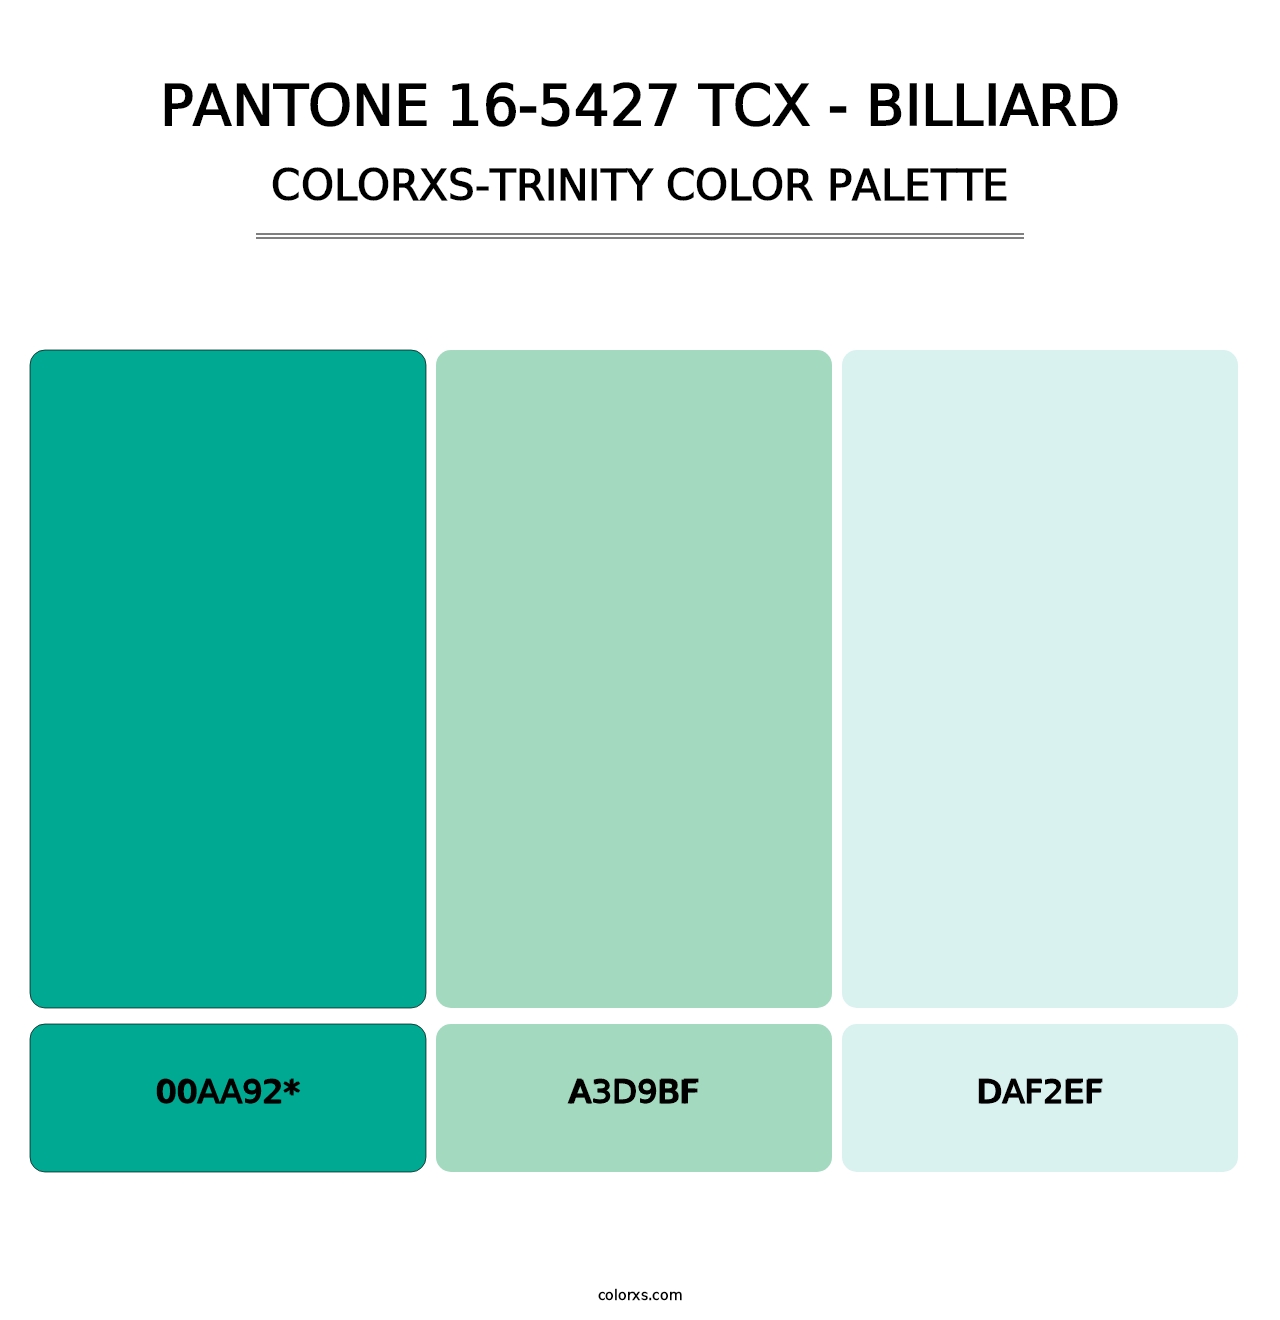 PANTONE 16-5427 TCX - Billiard - Colorxs Trinity Palette